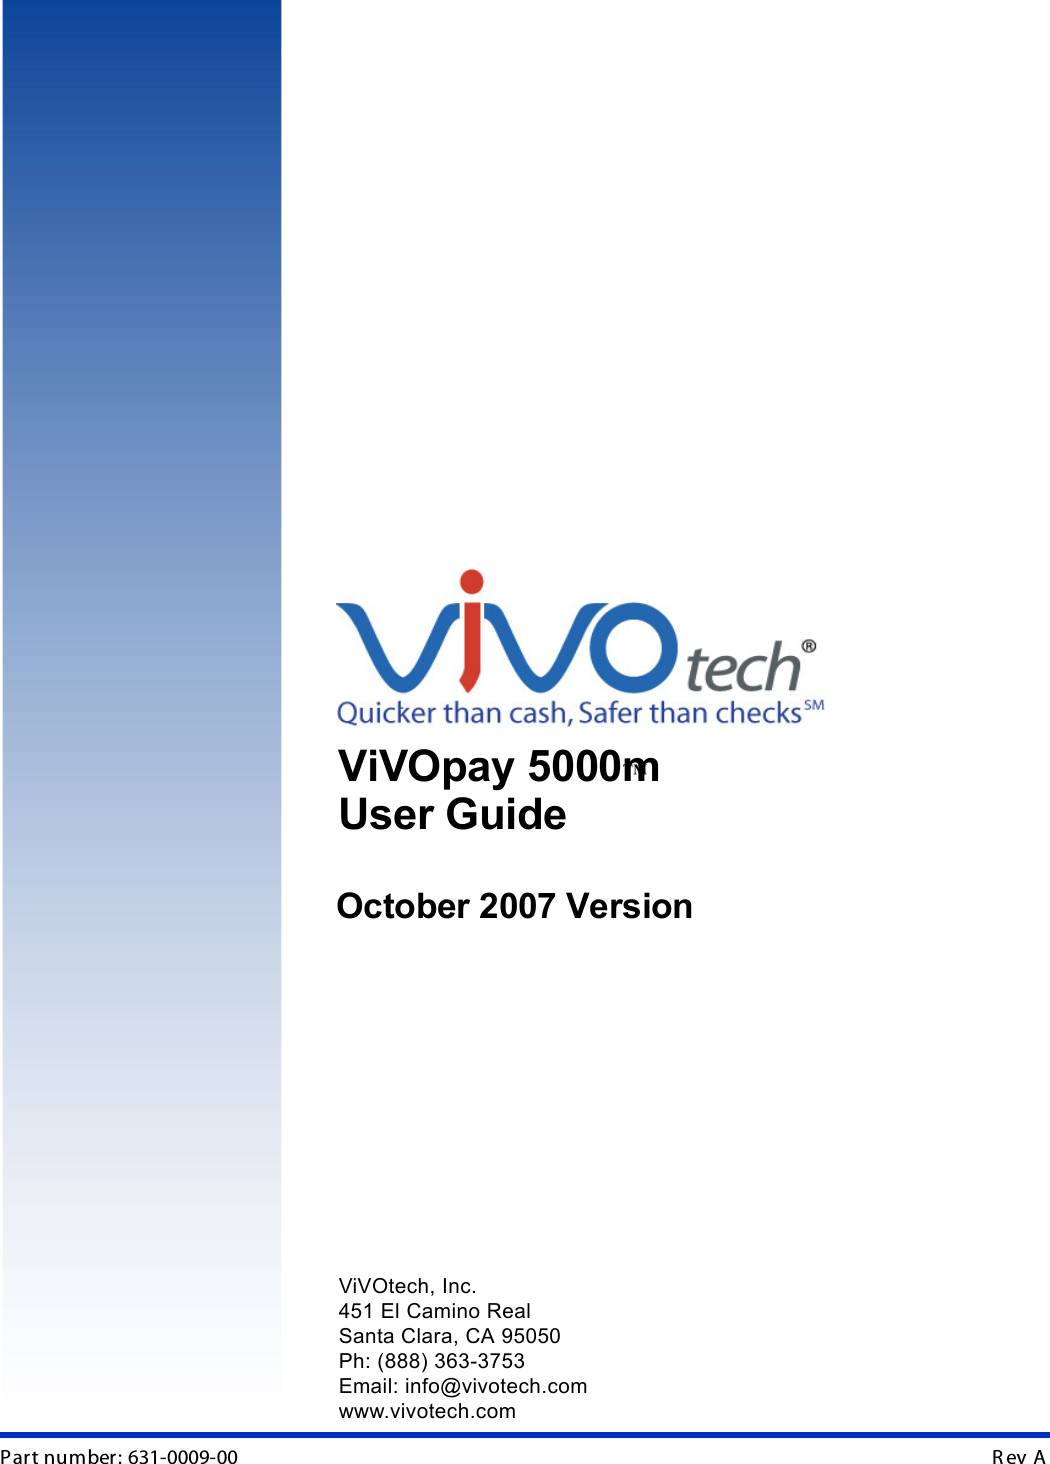 Part number: 631-0009-00                                                                                                                                                        R ev  A   AViVOpay 5000m™ User GuideOctober 2007 Version ViVOtech, Inc.451 El Camino RealSanta Clara, CA 95050Ph: (888) 363-3753Email: info@vivotech.comwww.vivotech.com